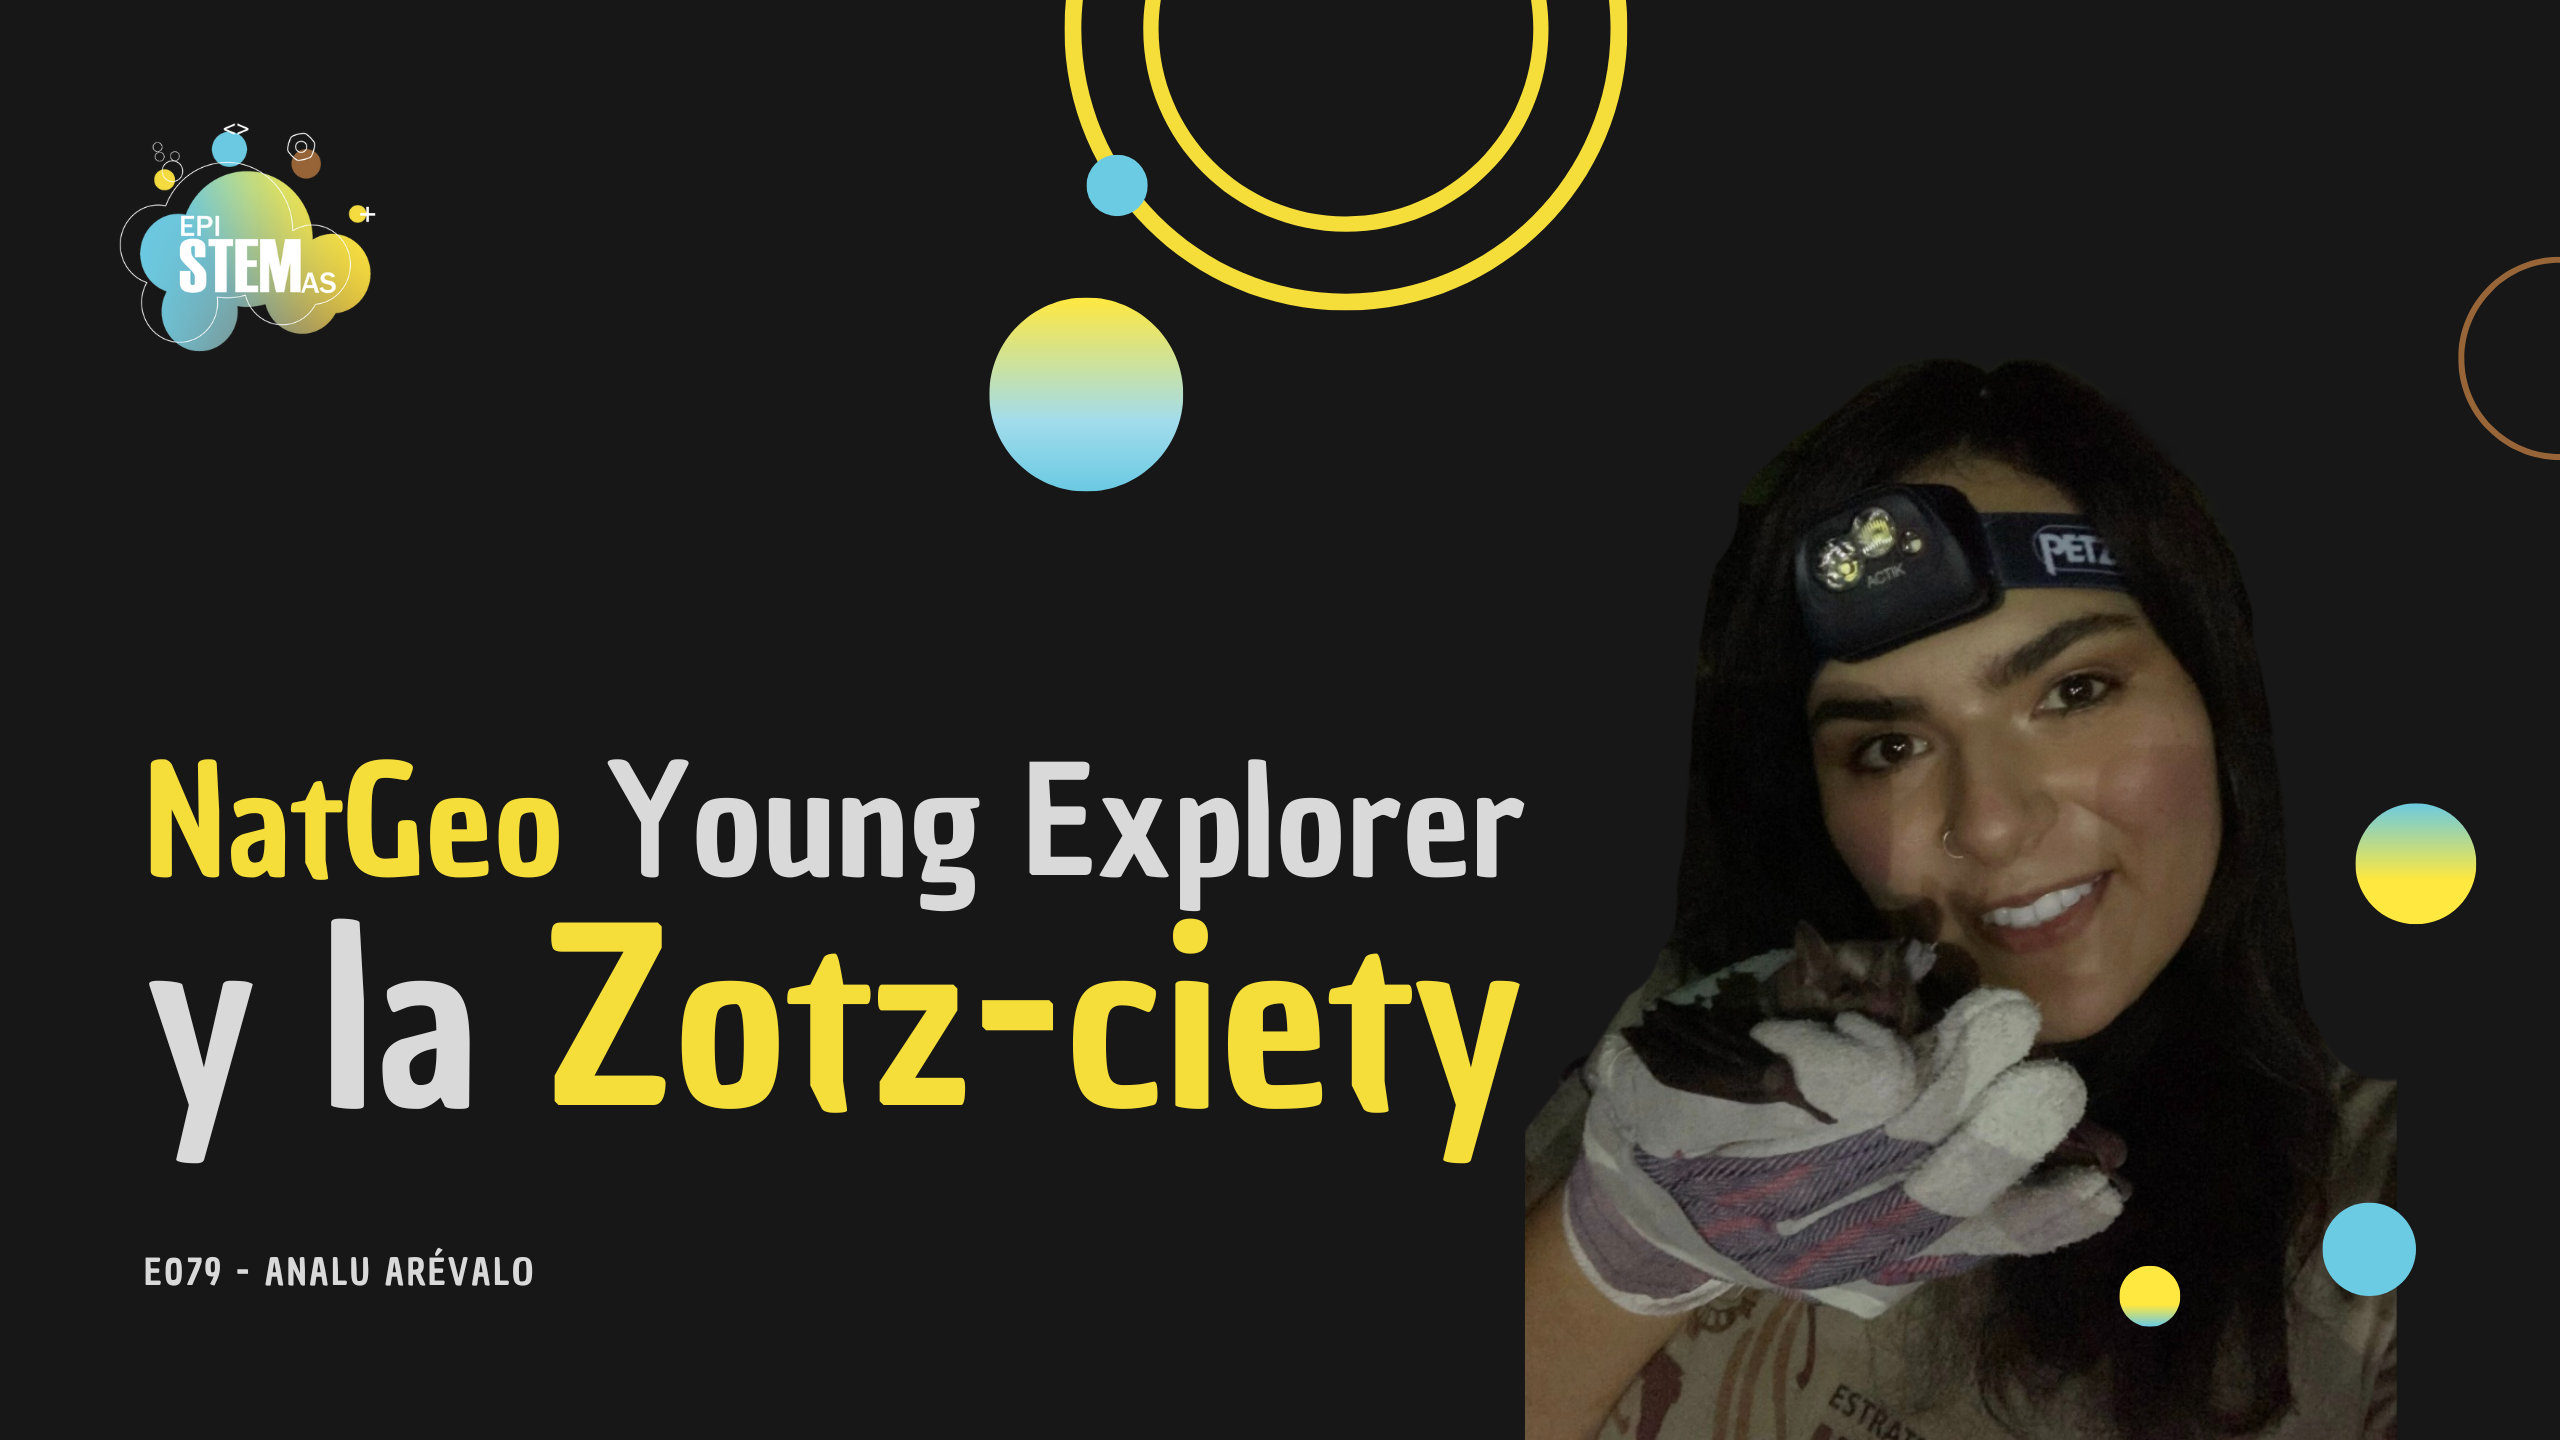 NatGeo Young Explorer y la Zotz-ciety